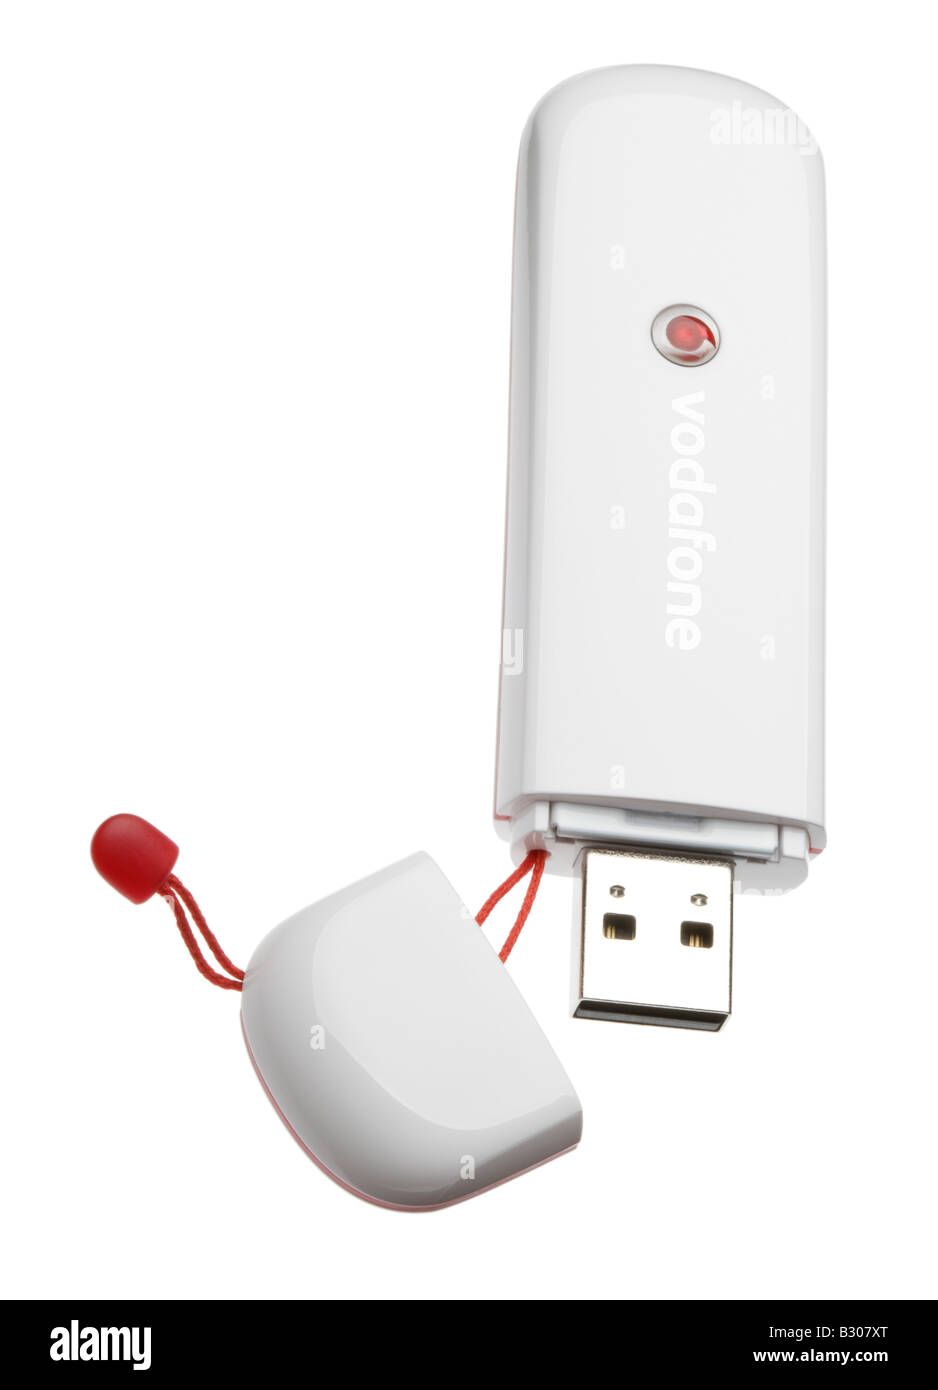 Vodafone USB broadband dongle Stock Photo Alamy